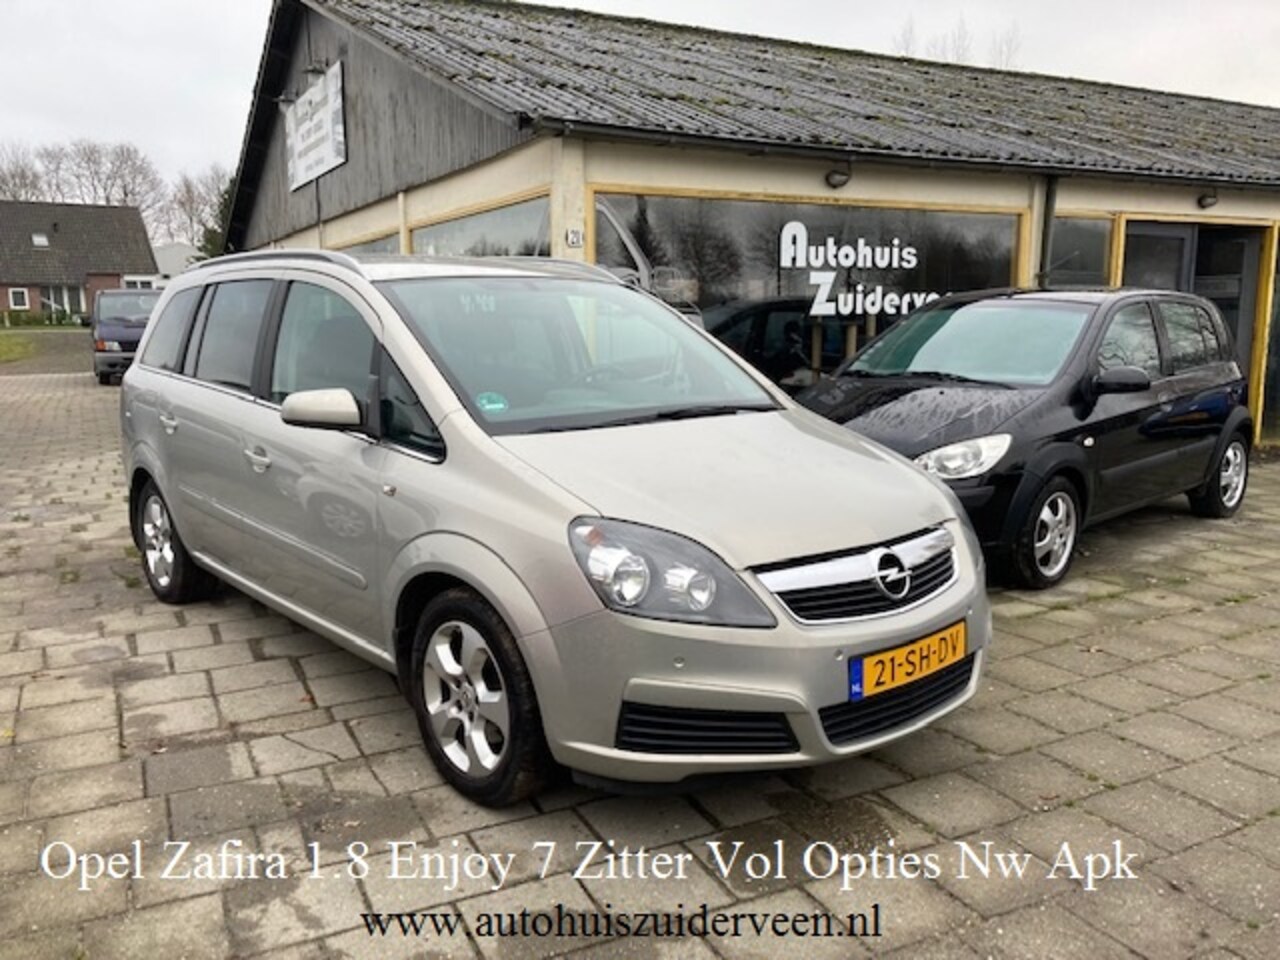 Opel Zafira - 1.8 Enjoy 7 Zitter Vol Opties Nw Apk Boekjes - AutoWereld.nl